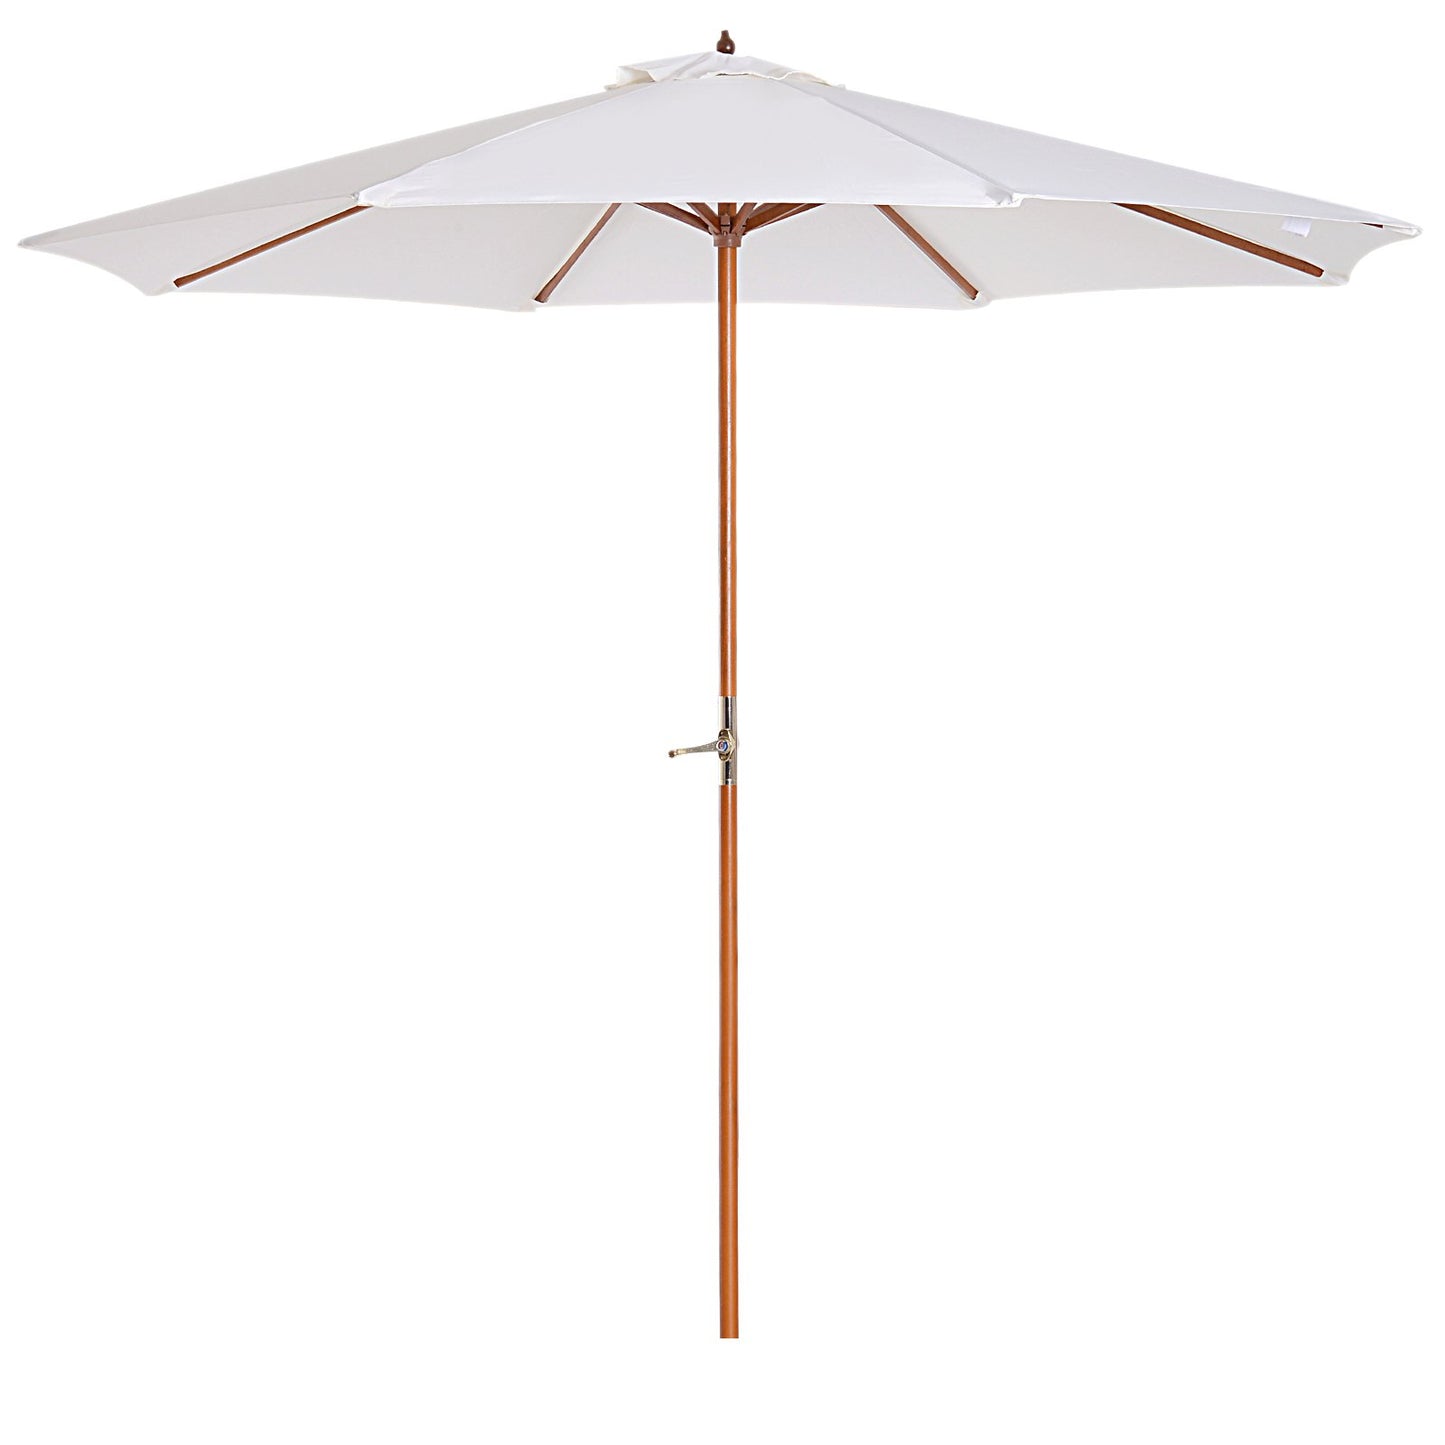 Nancy's Buckeye Parasol - Garden umbrella - Wood - Market umbrella - White - Ø 270 cm